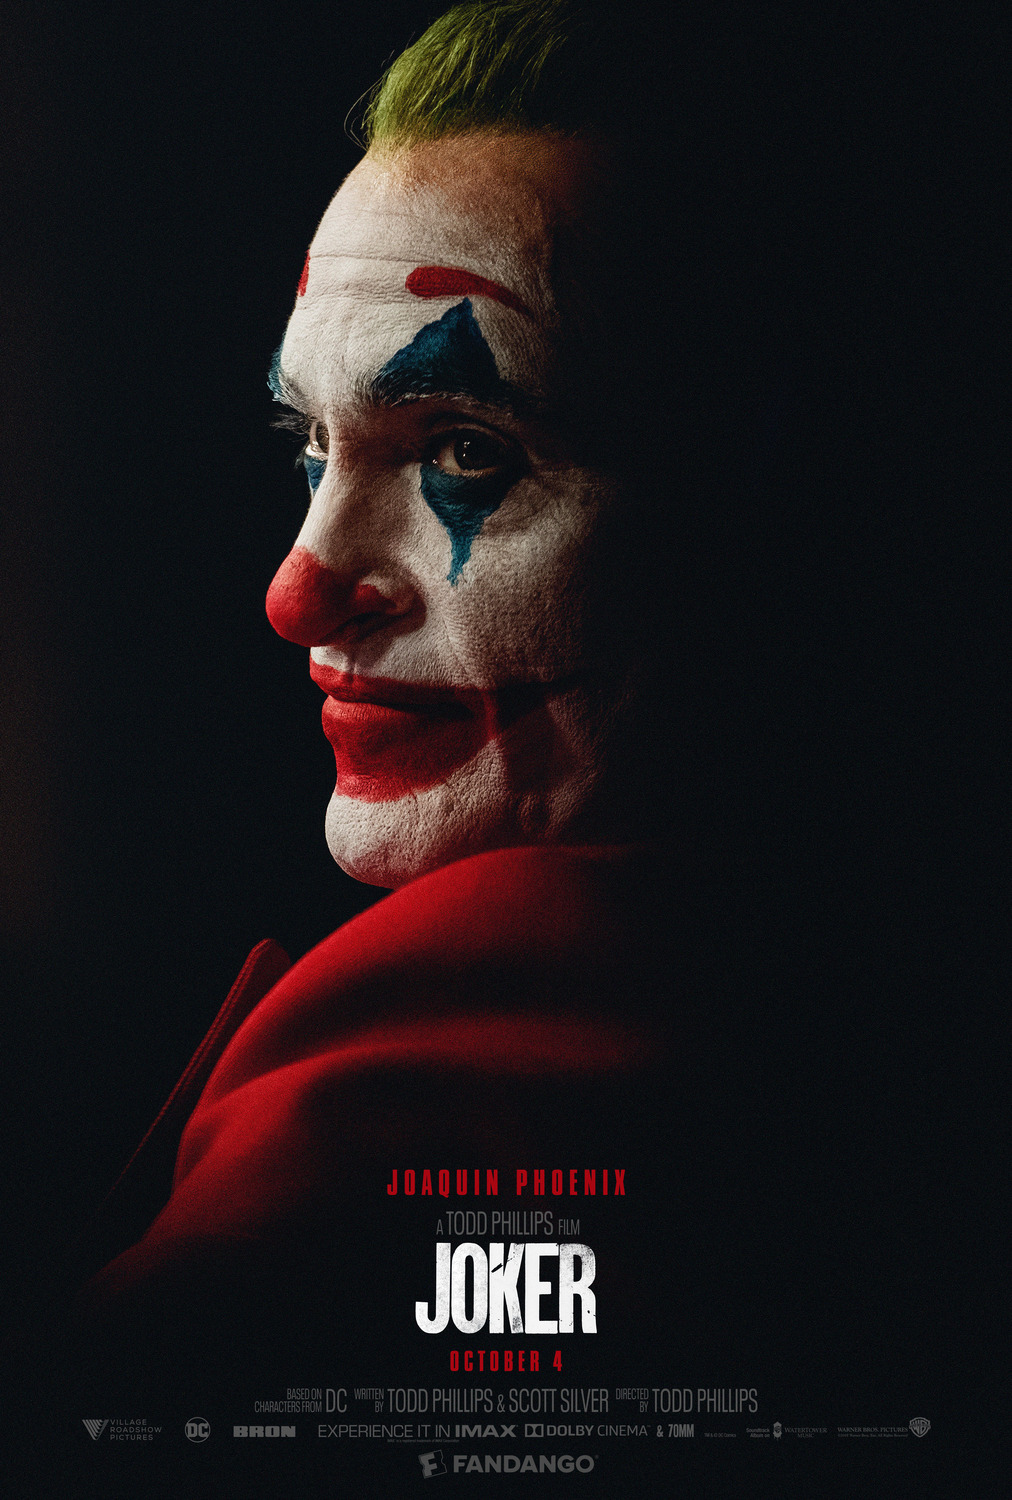 Joker movie poster starring Joaquin Phoenix